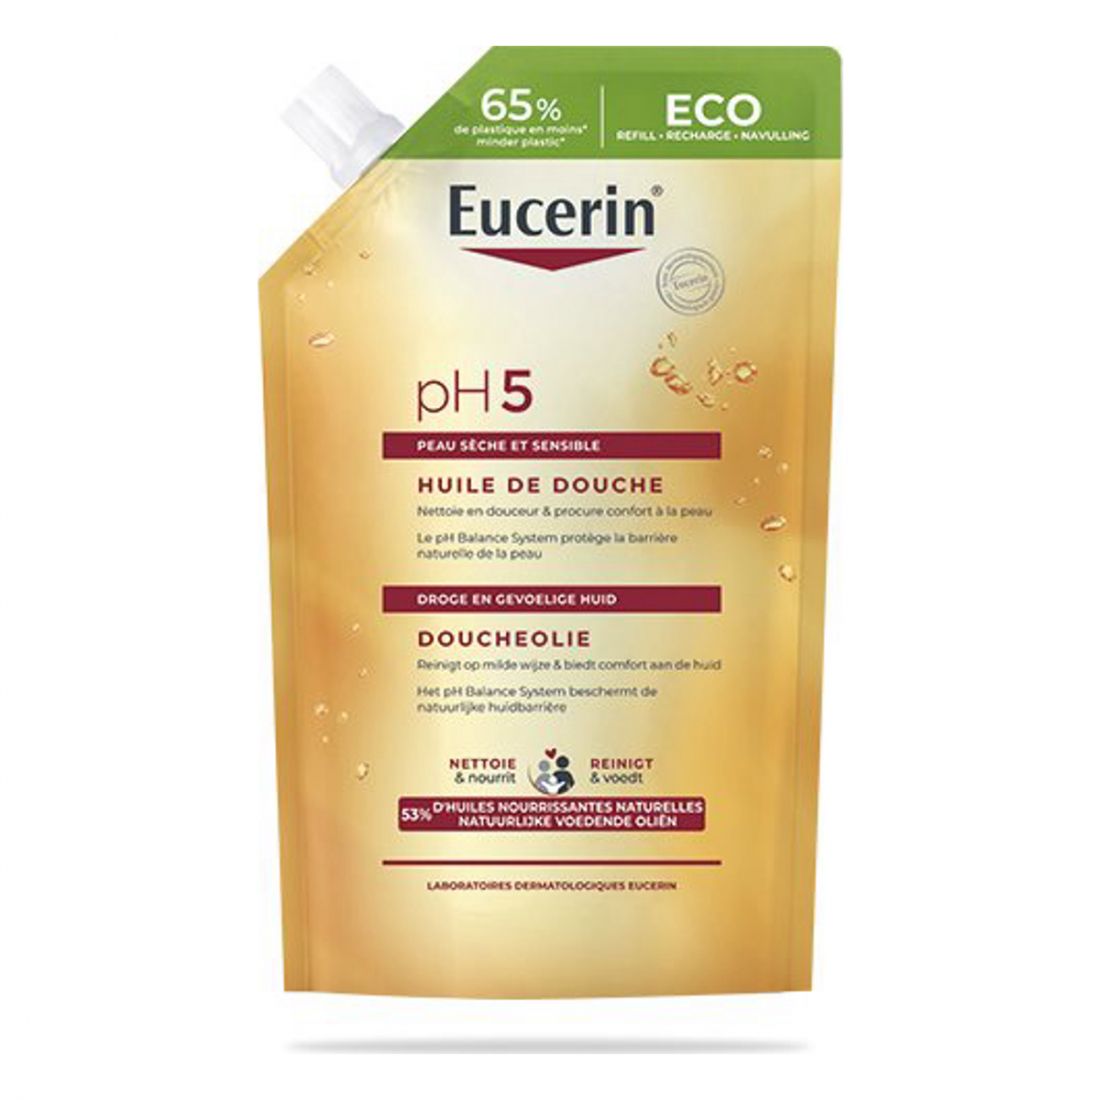 Eucerin - Huile de douche 'Ph5' - 400 ml